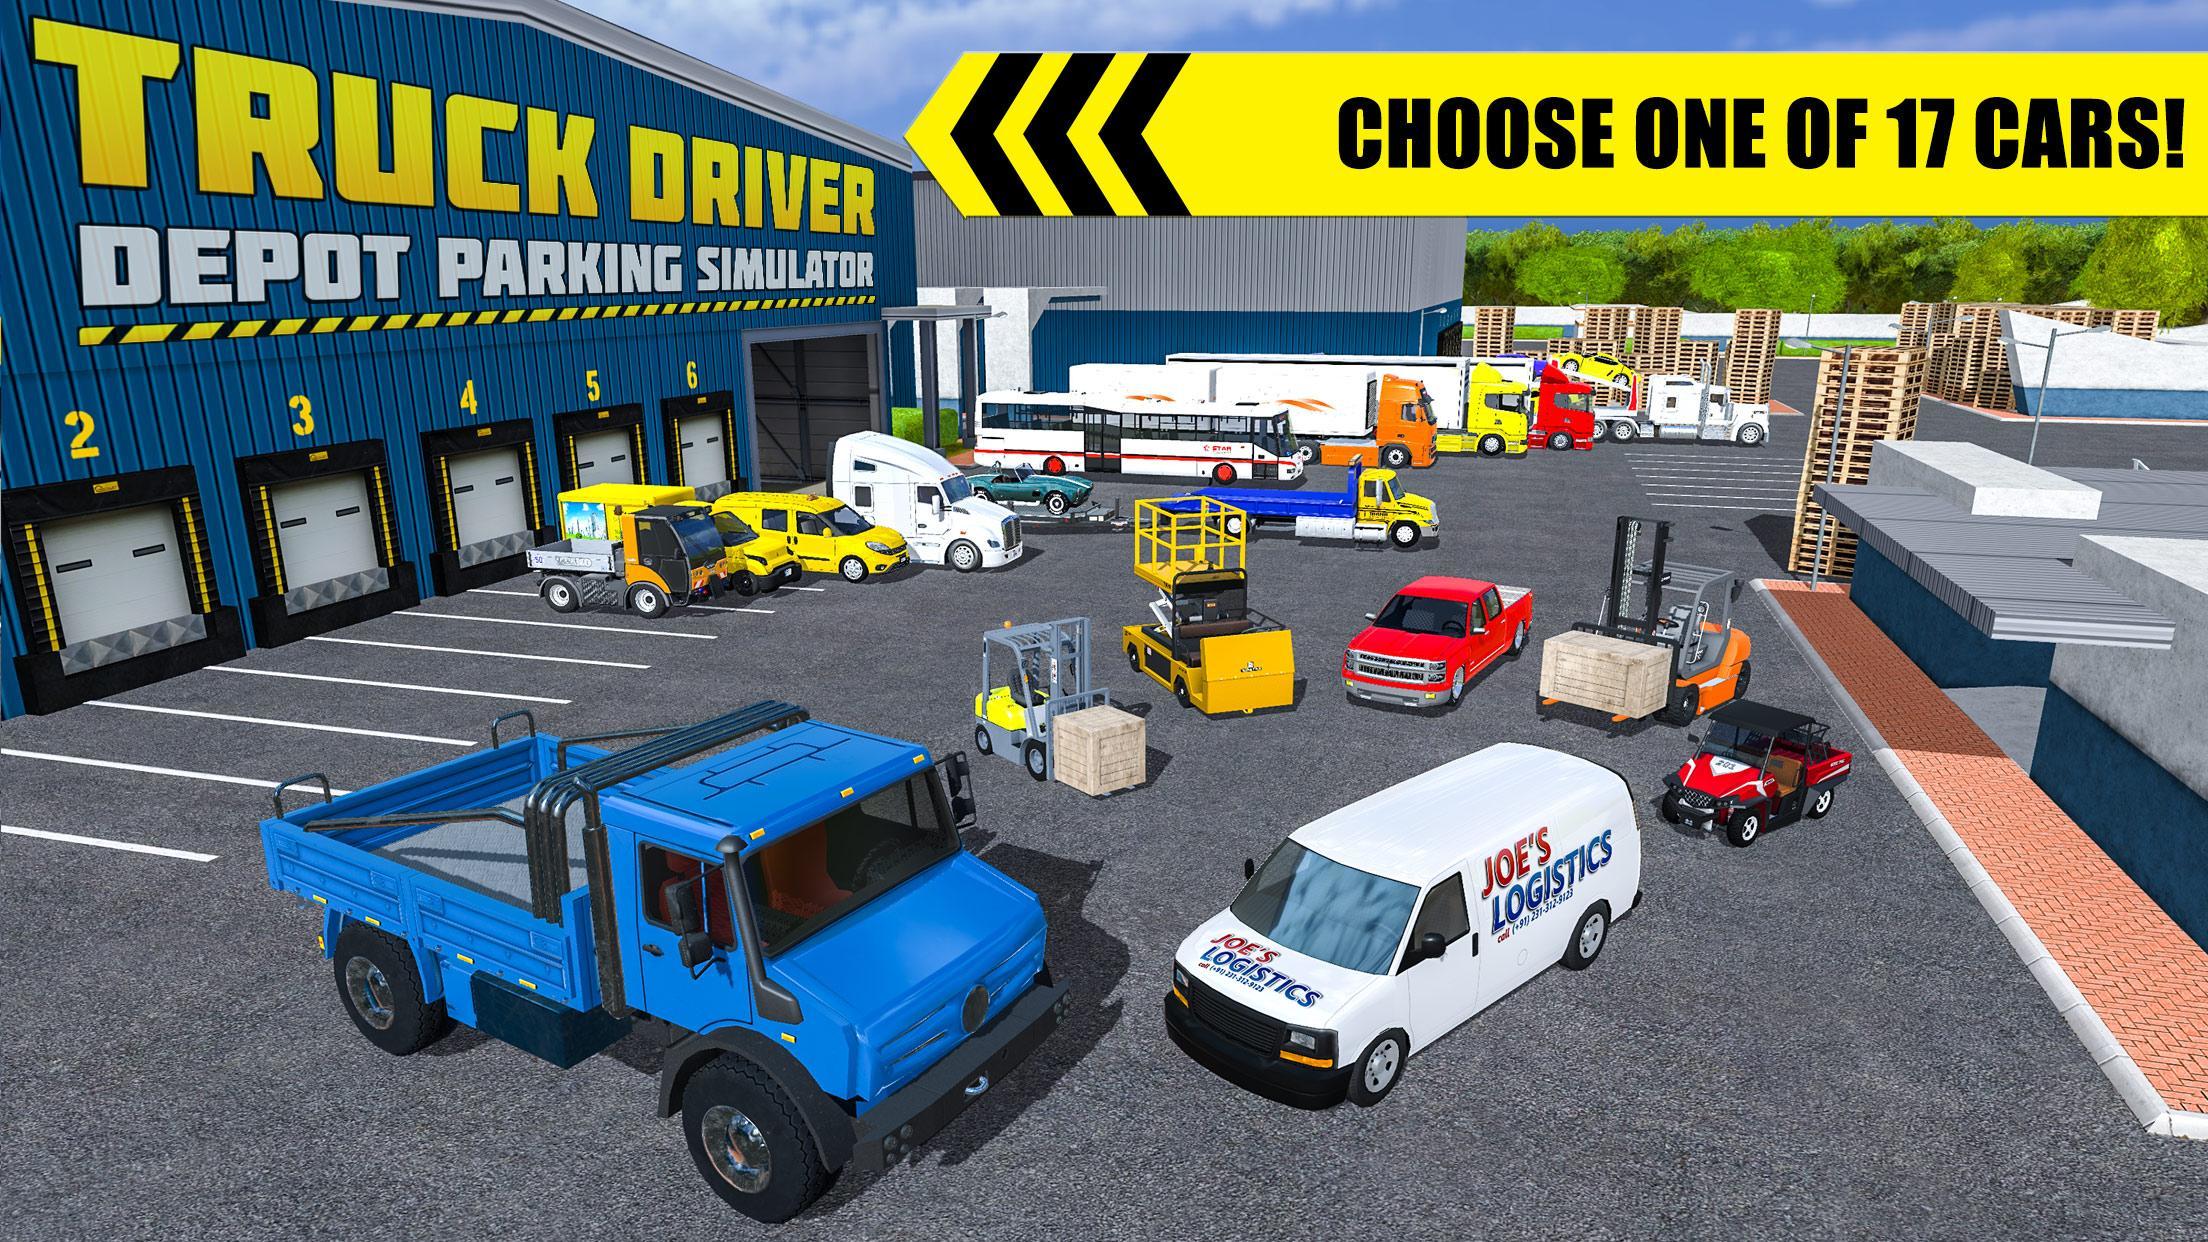 Truck Driver: Depot Parking Siのキャプチャ